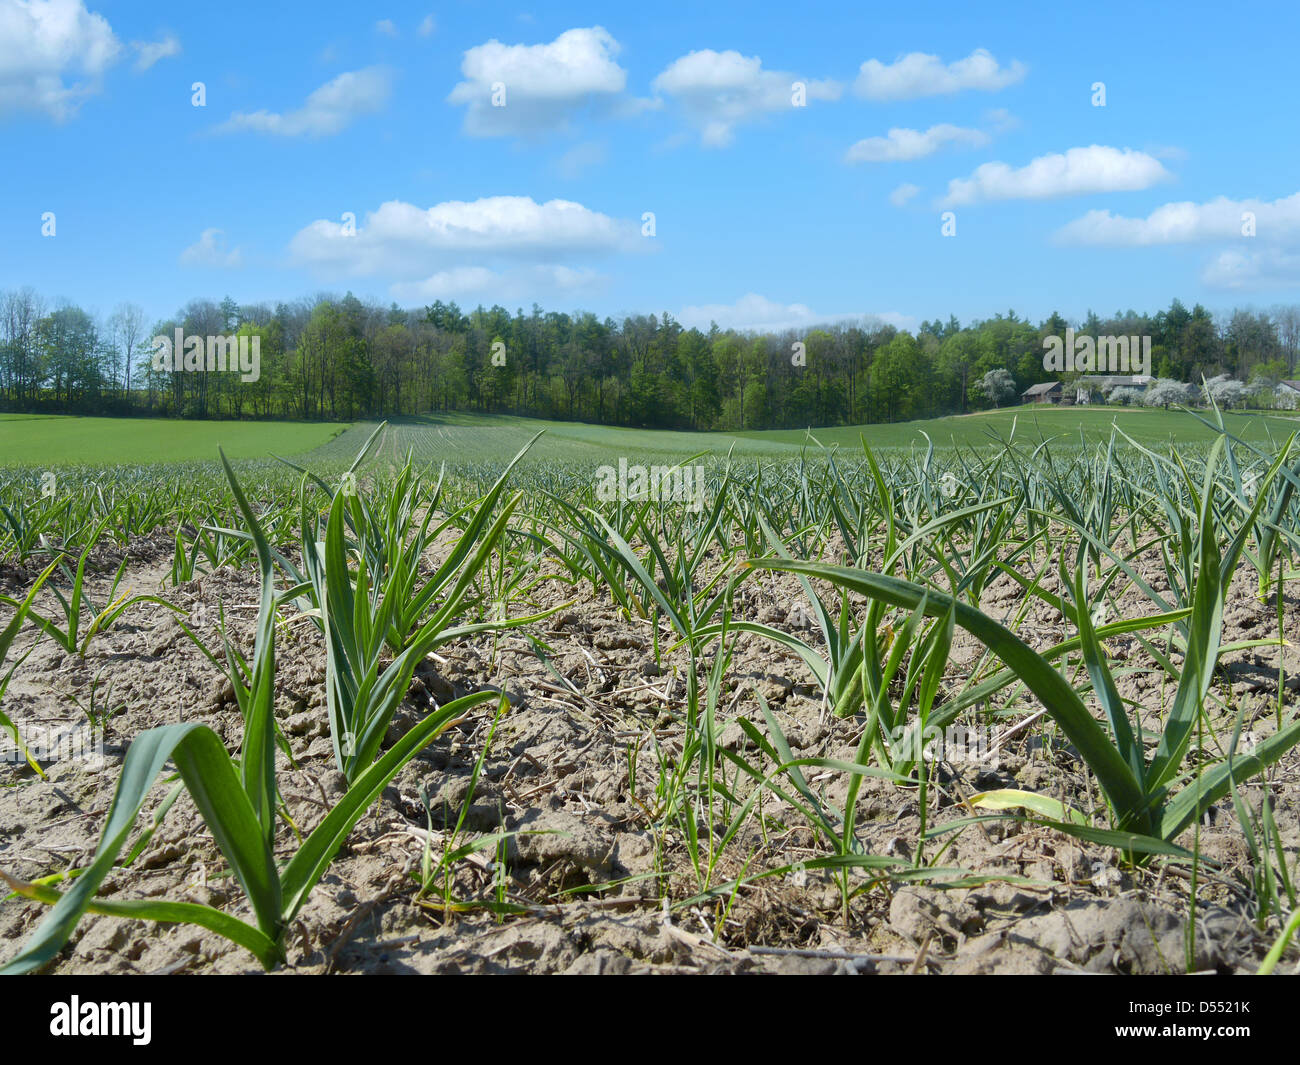 Arable field of ripening garlic plantation Stock Photo